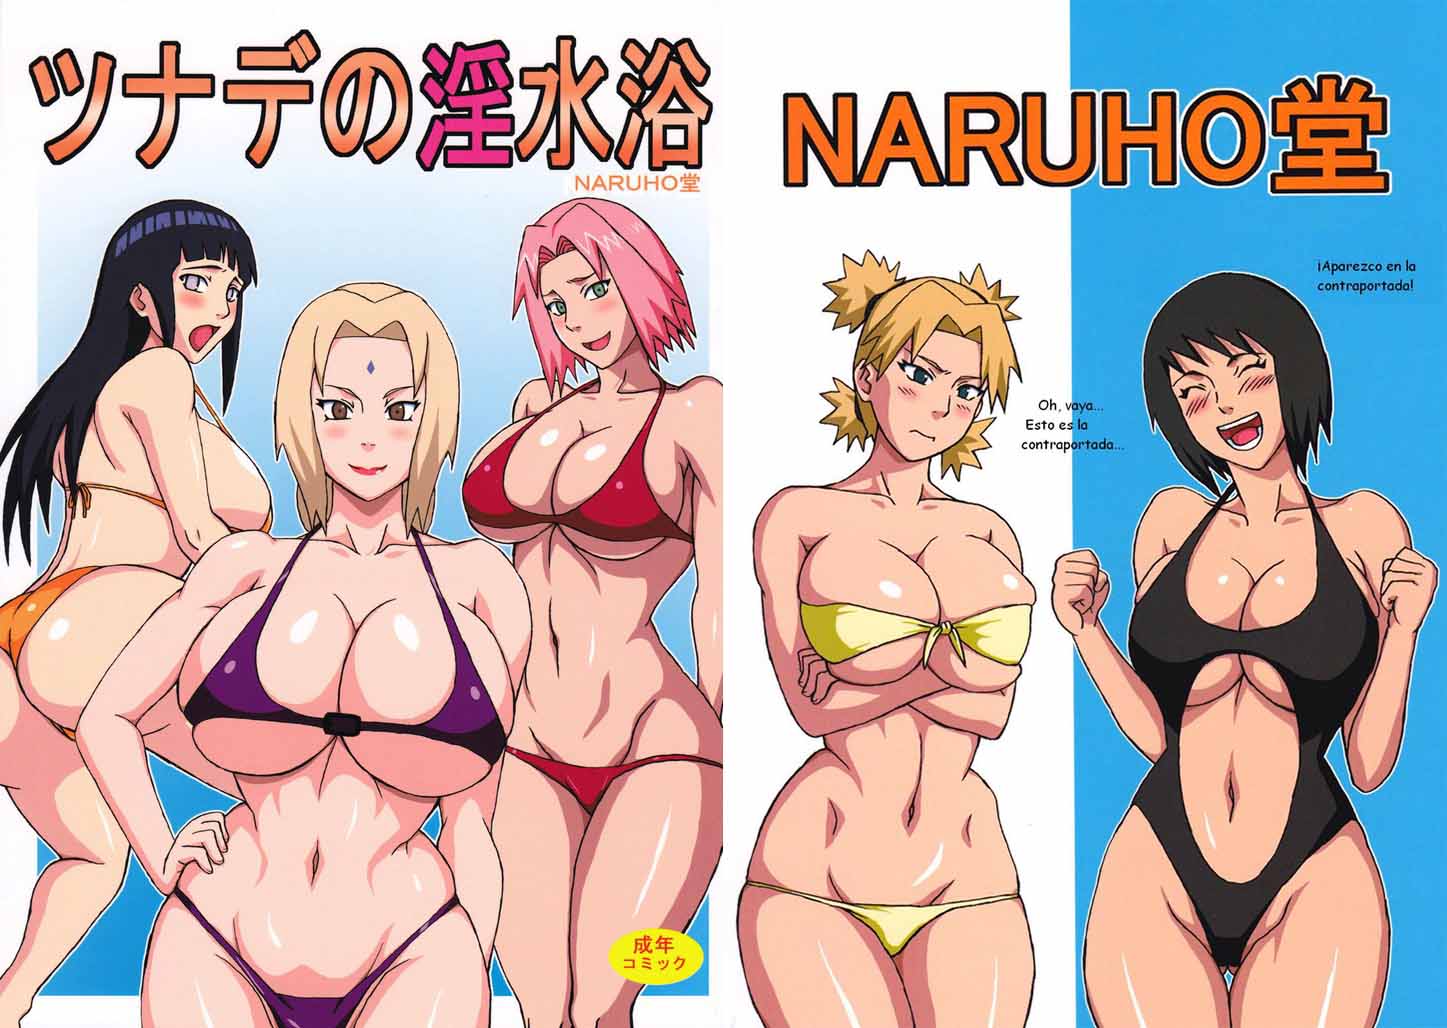 Naruto porno comics